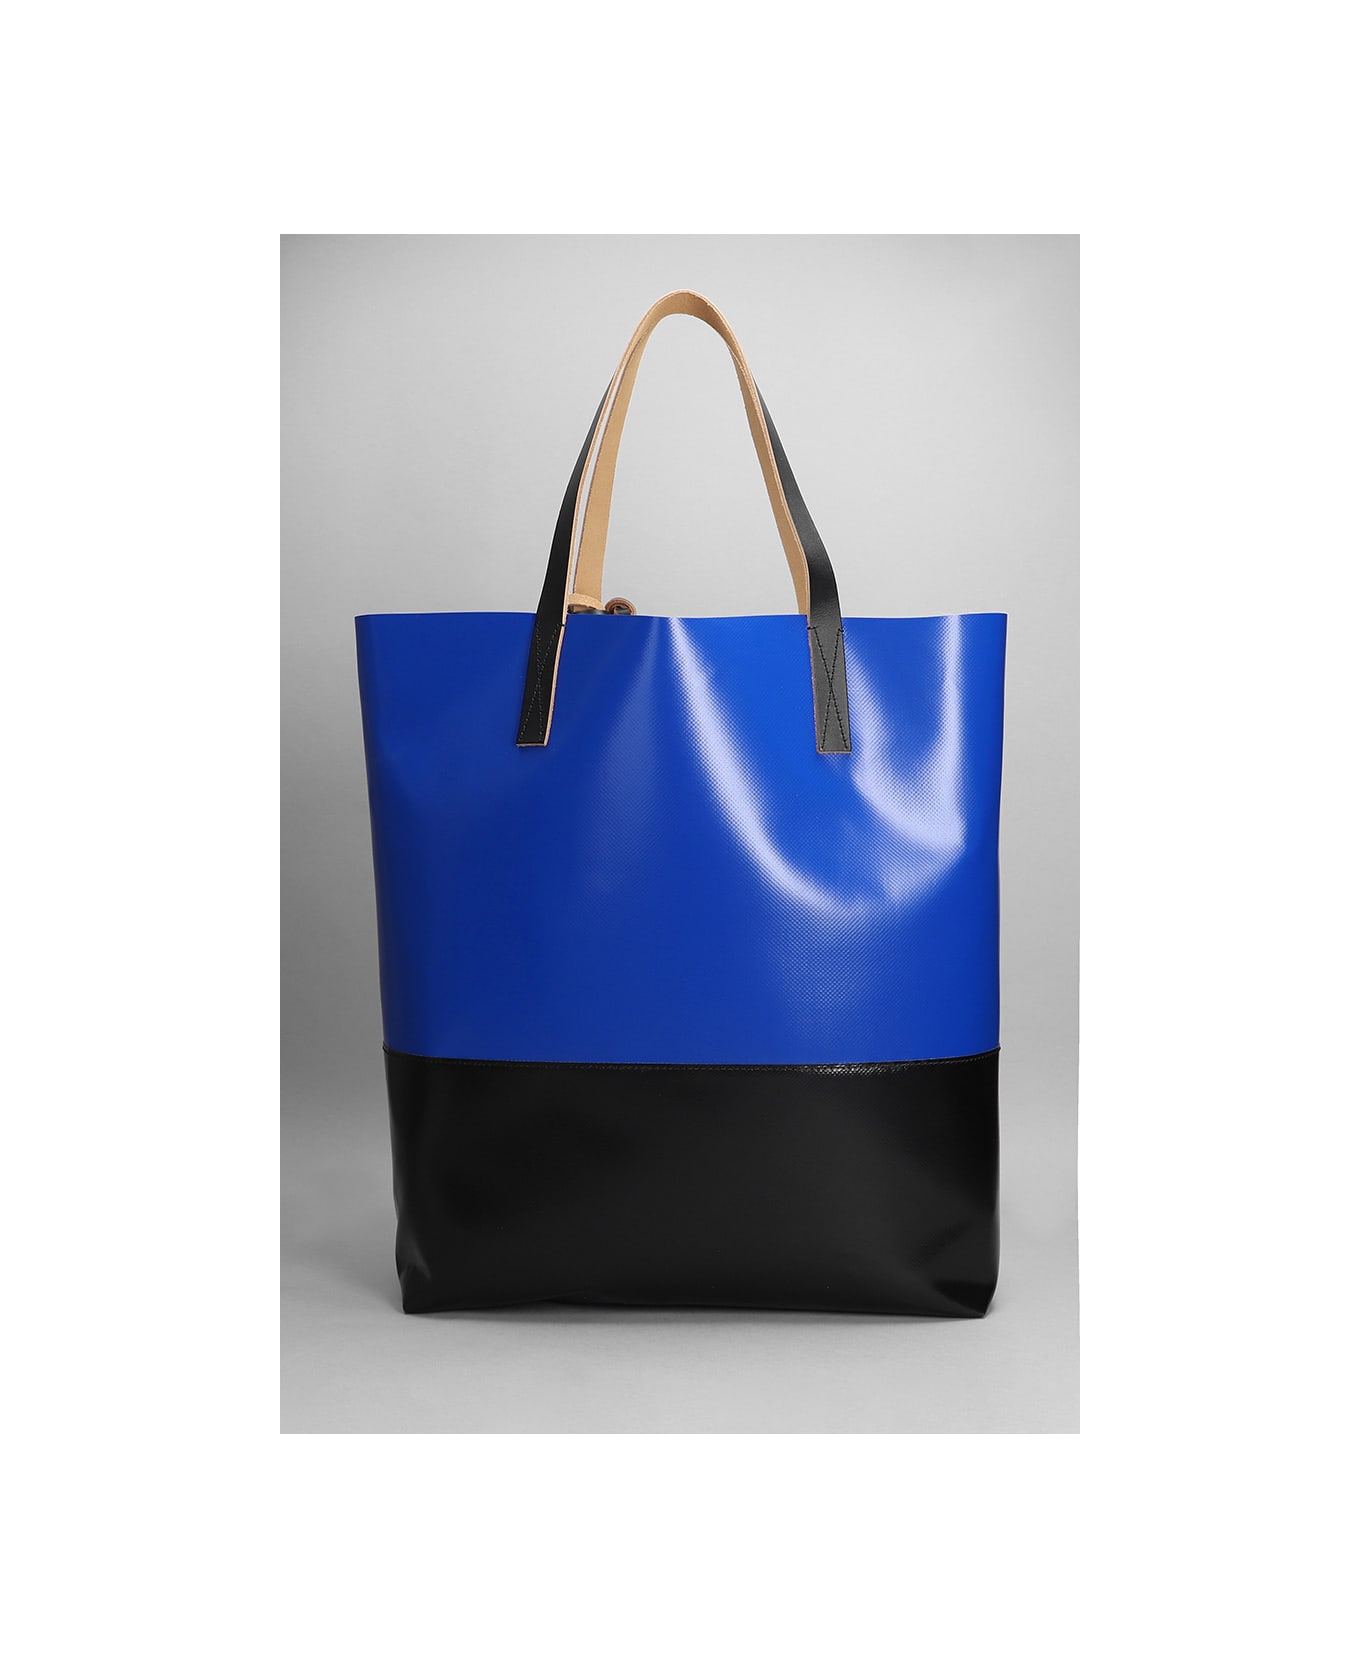 Marni Pvc Tribeca Shopping Bag - Blue